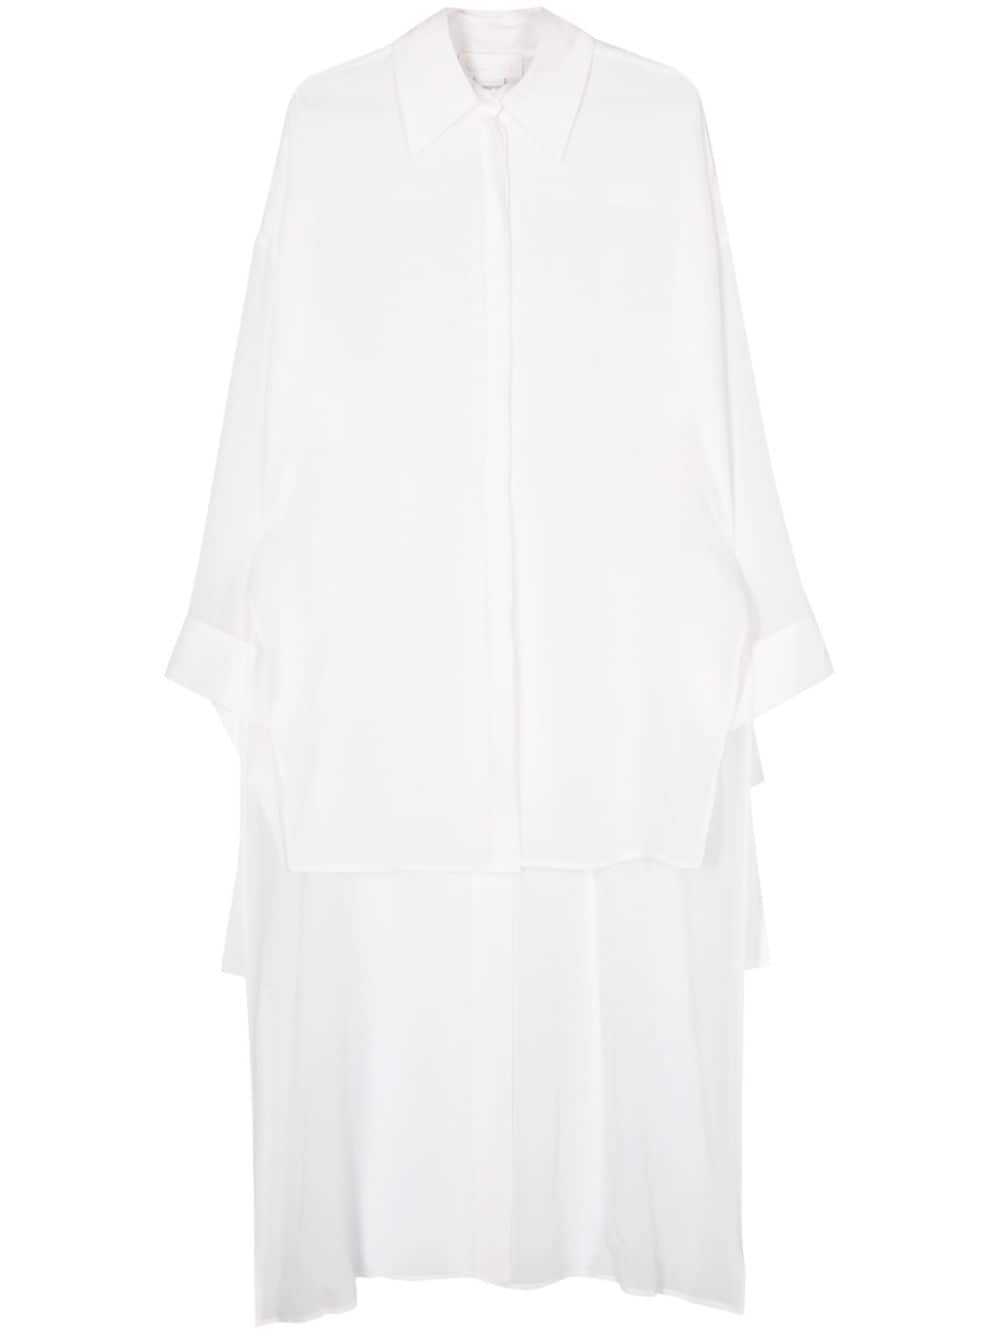 Genny Floral-appliqué Crepe Shirt In White